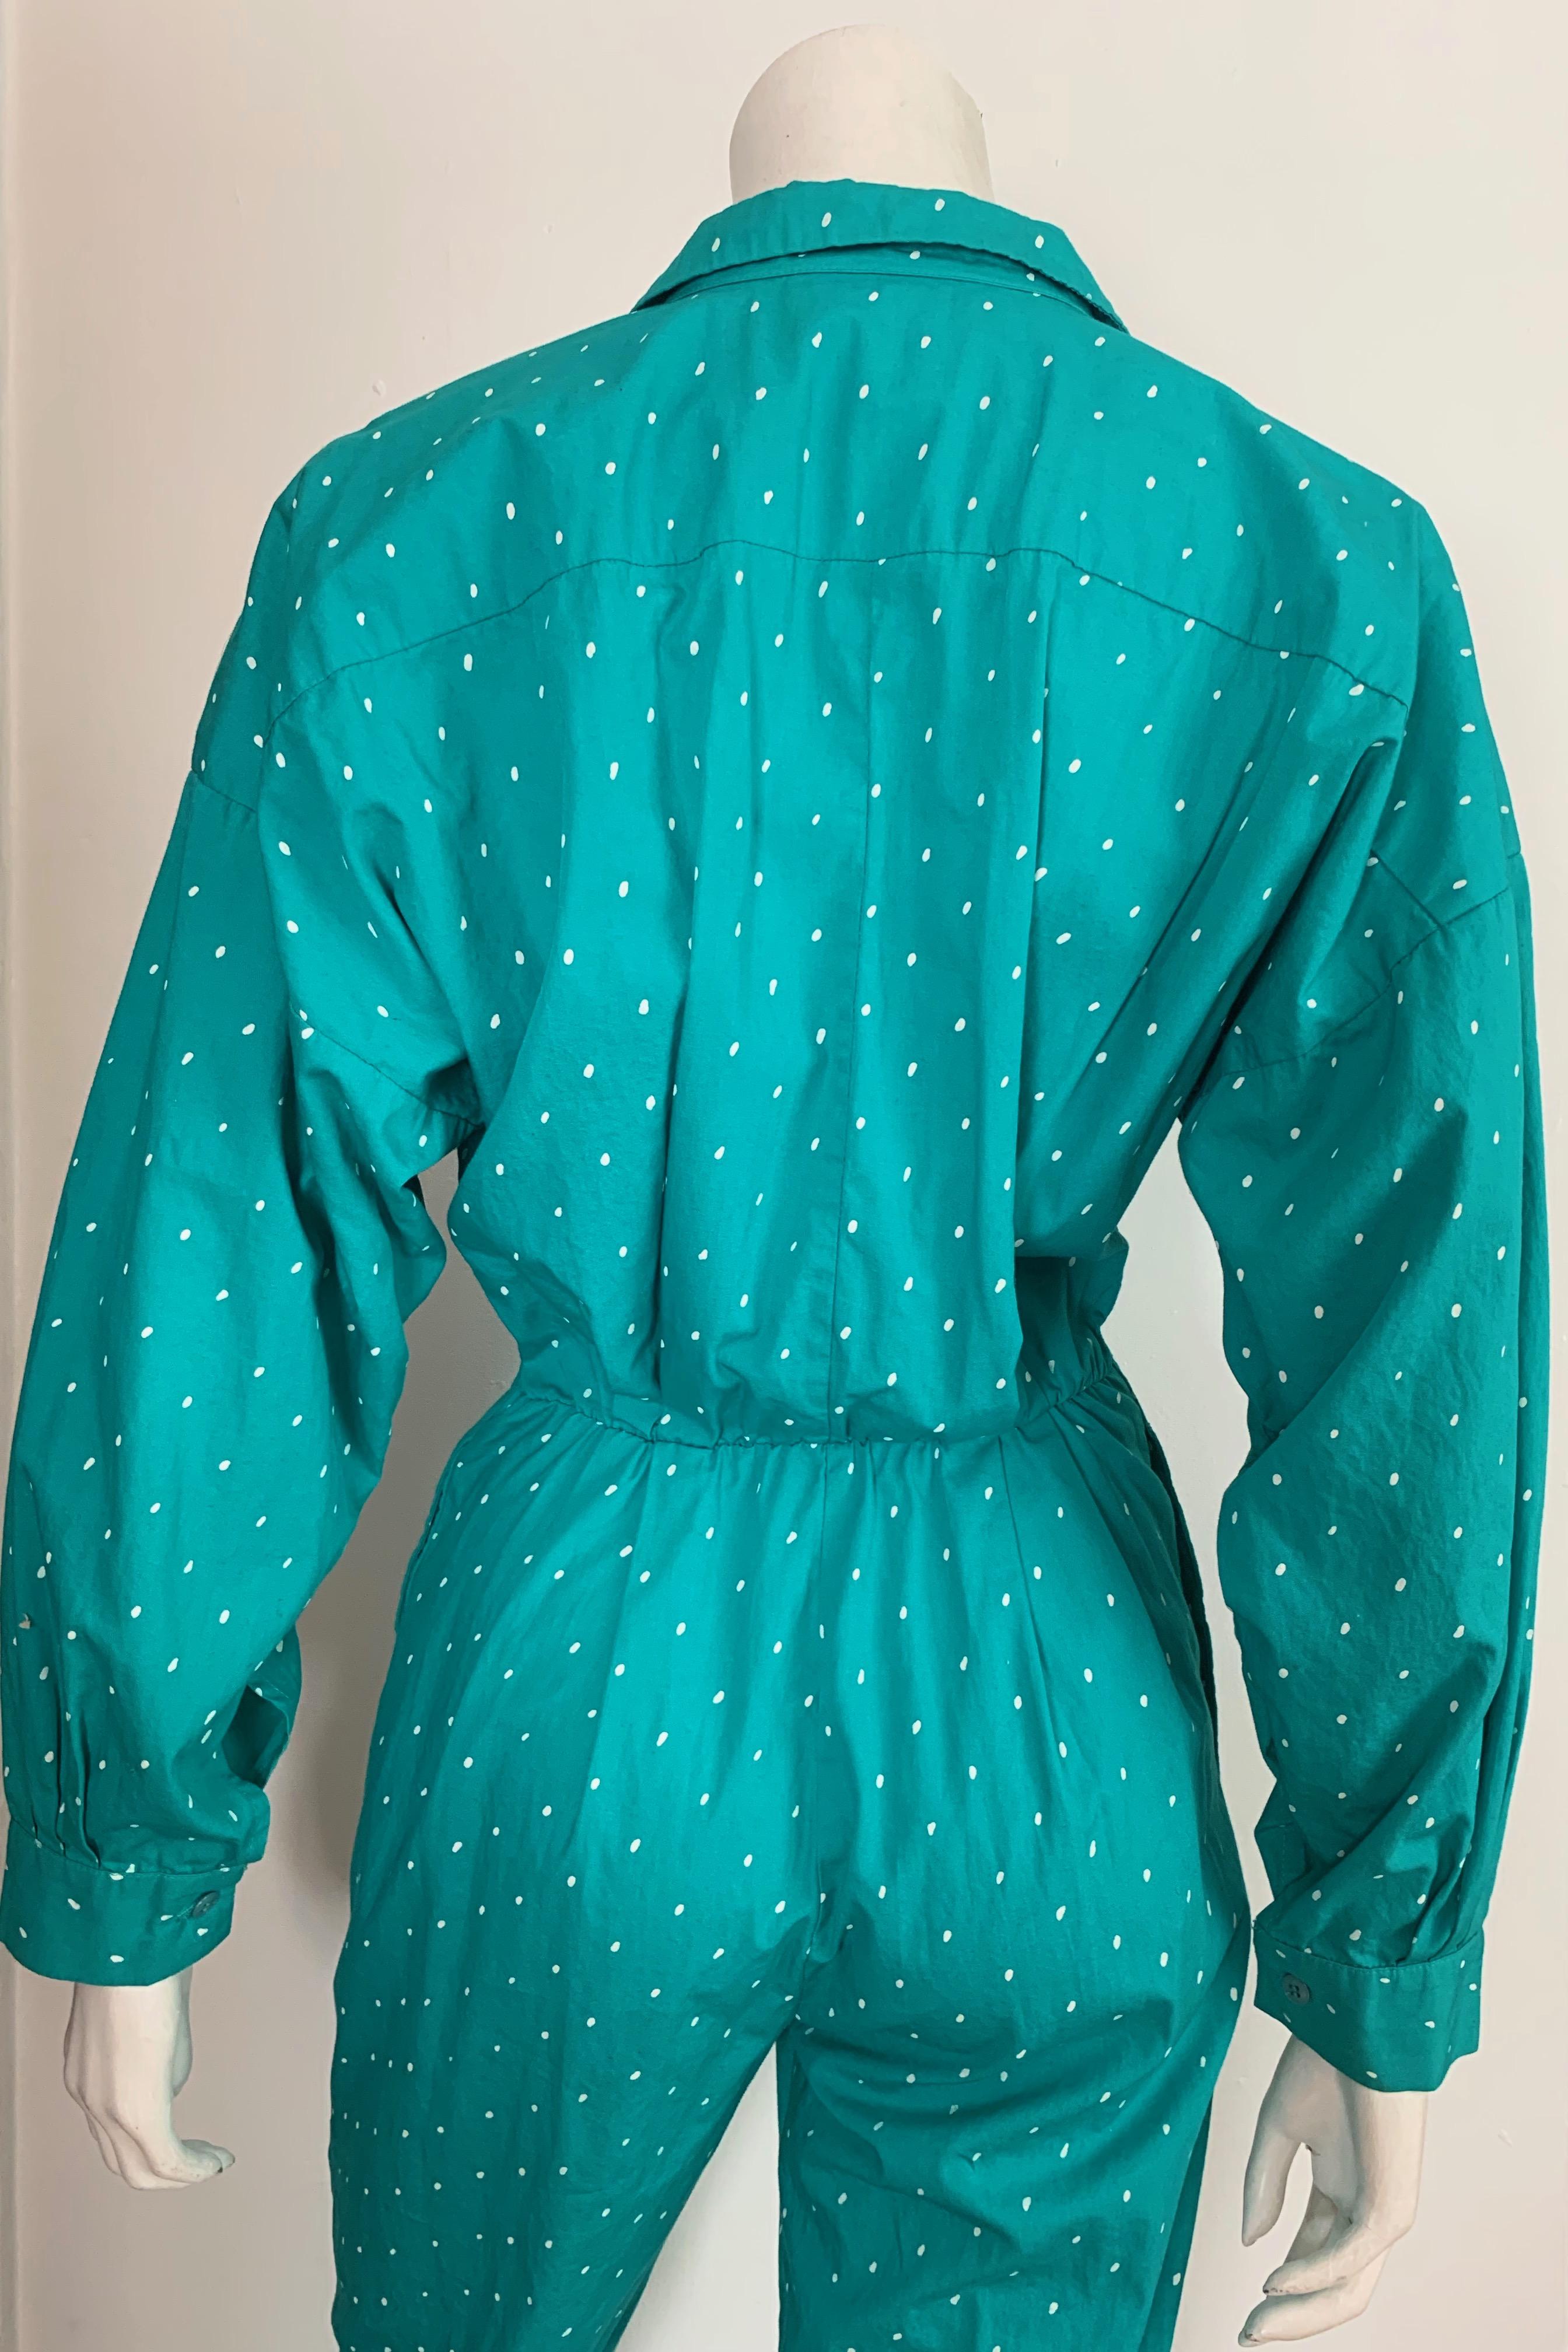 Saint Germain 1980s Cotton Polka Dot Jumpsuit with Pockets Size 4.  6